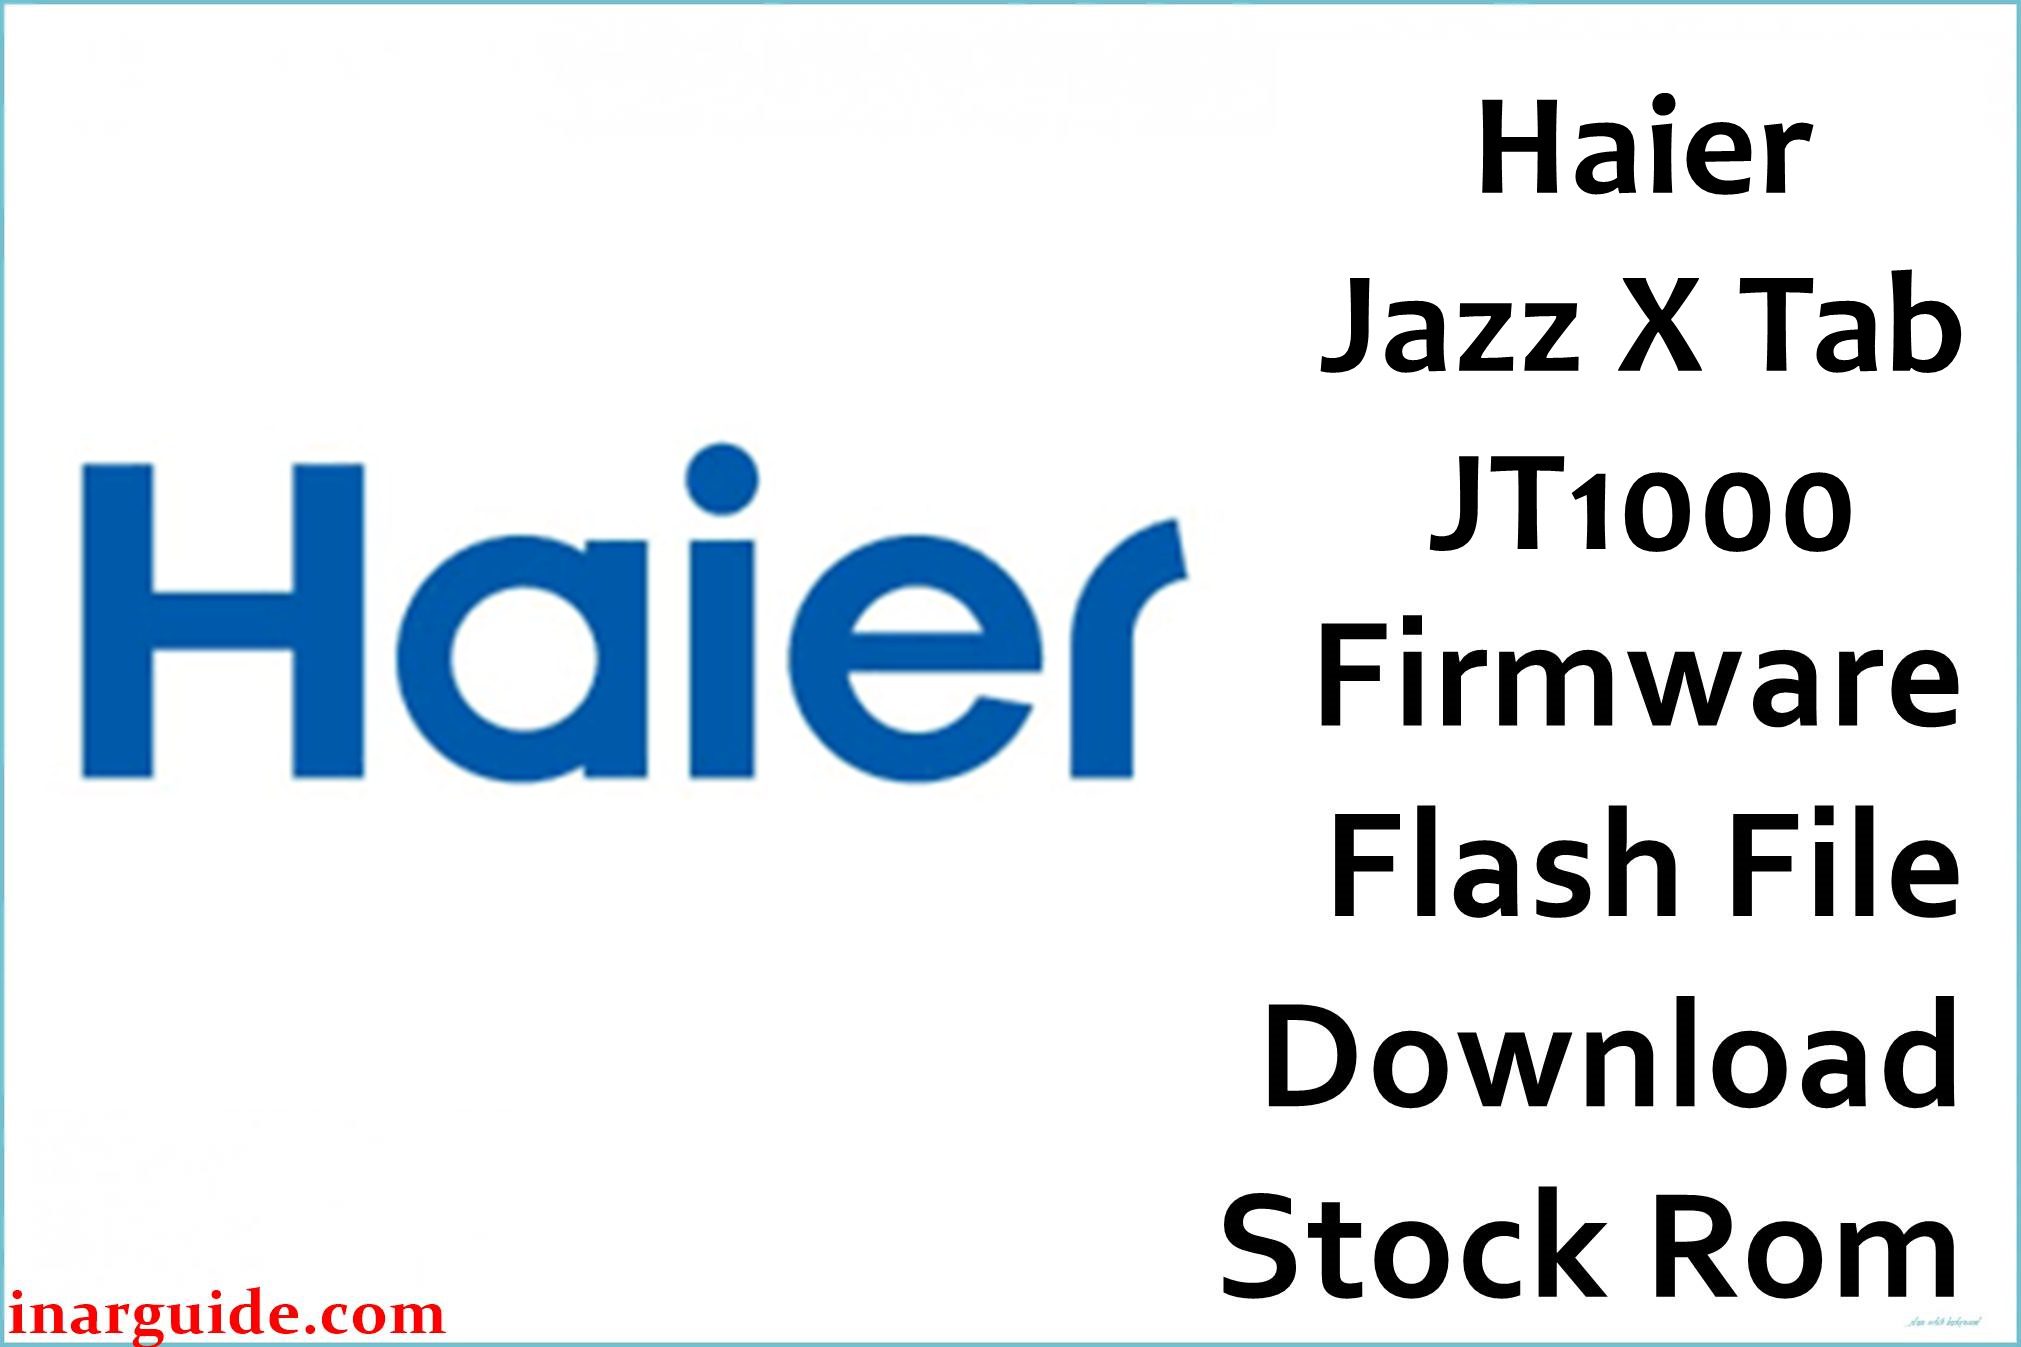 Haier Jazz X Tab JT1000